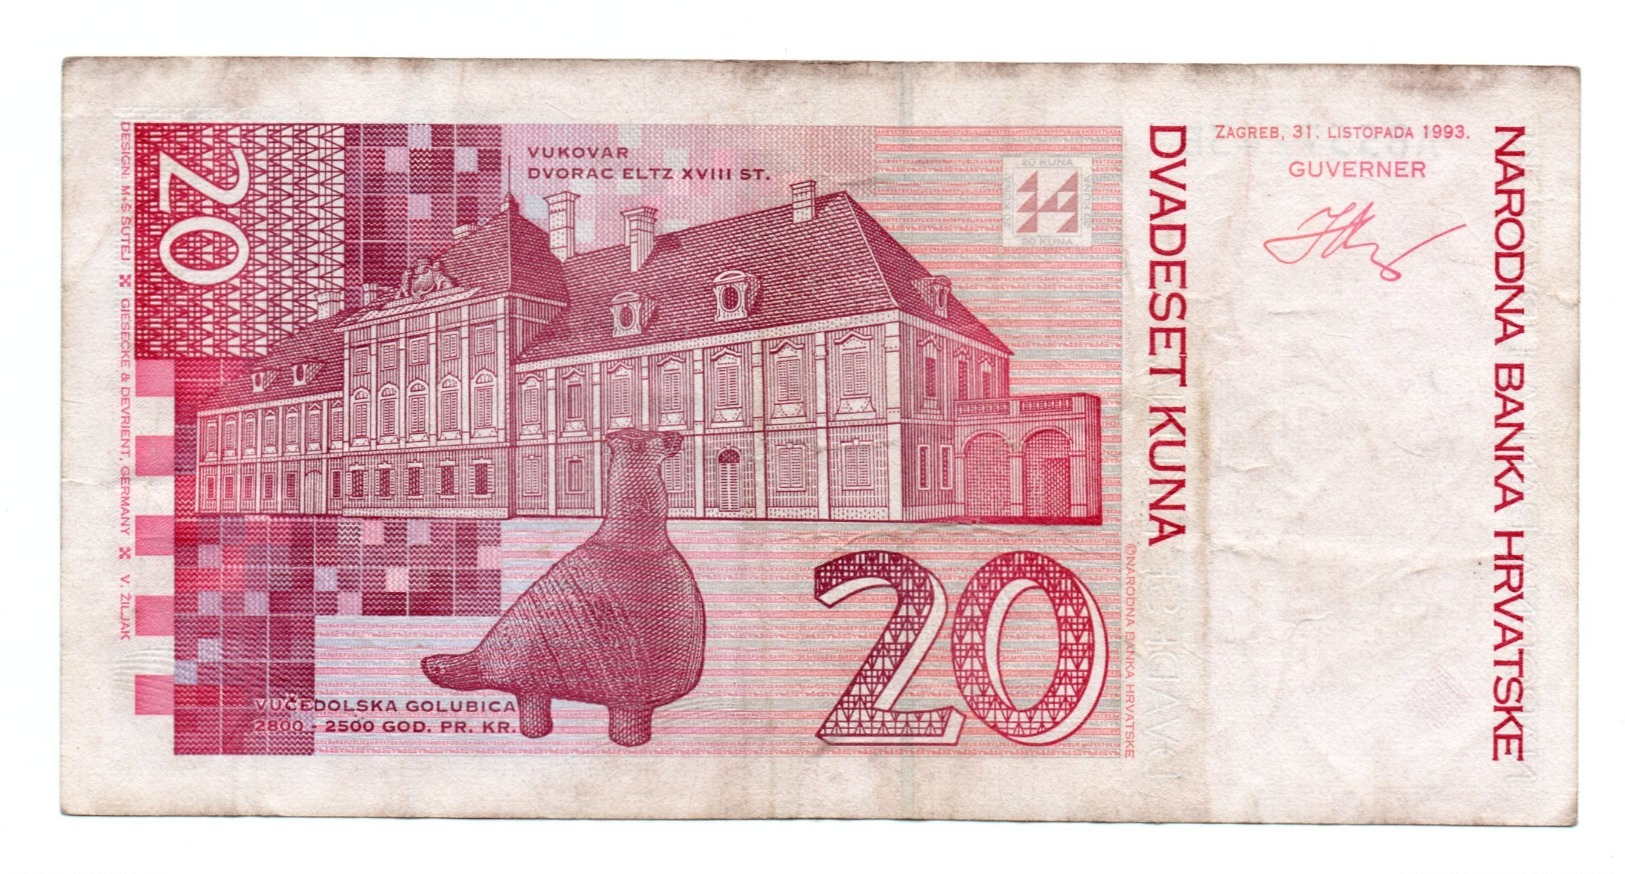 CROATIA»20 KUNA»1993»P-30 (WORLD PAPER MONEY)»VF CONDITION - Croatia